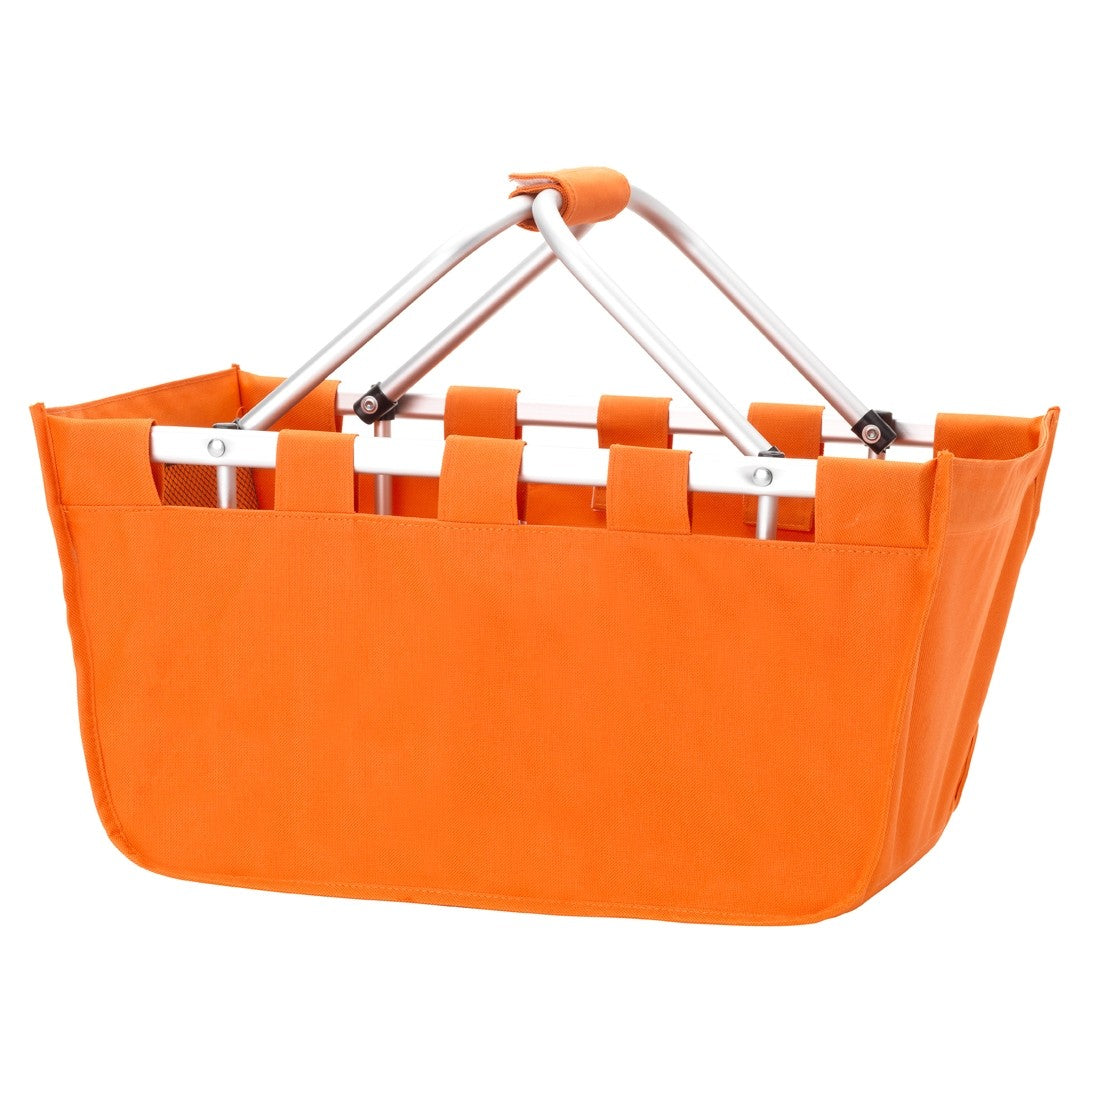 Orange Market Tote - Versatile and folds flat for easy storage